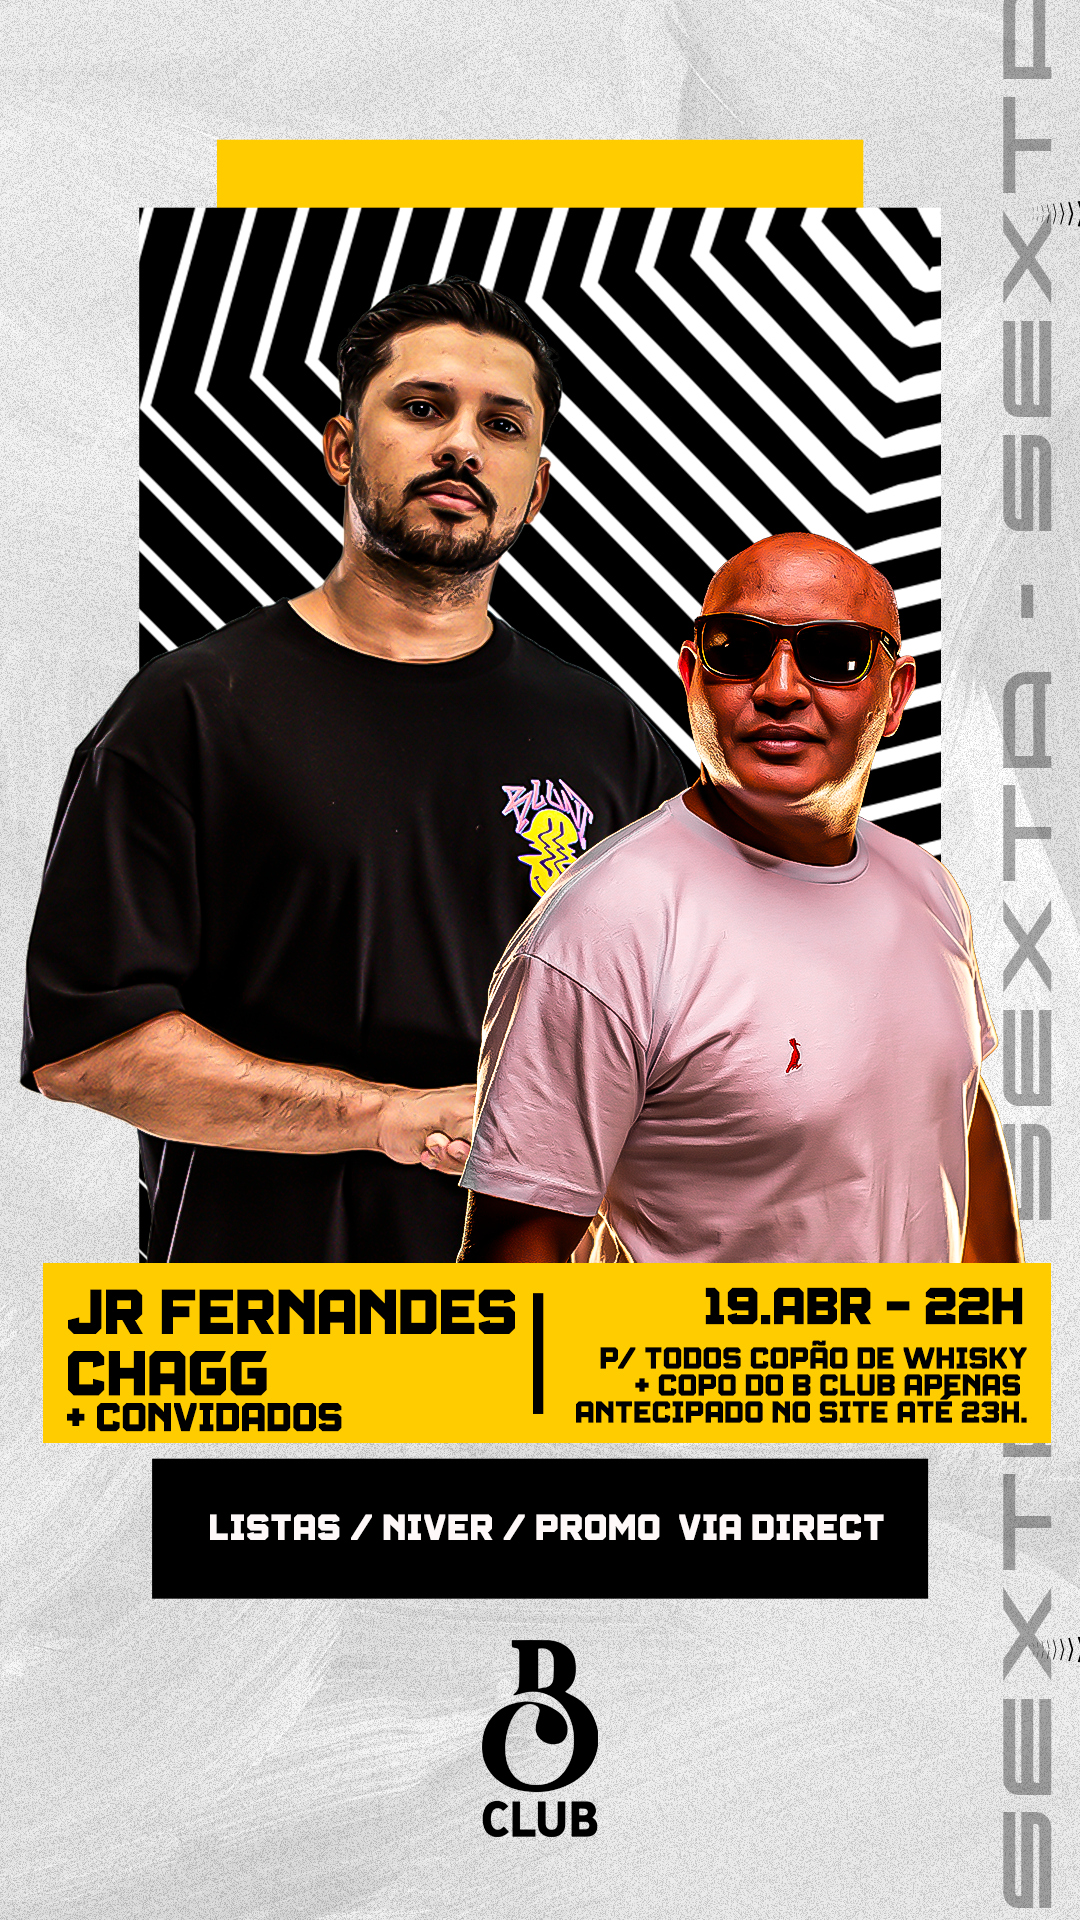 B CLUB: Sexta Jr. Fernandes + Chagg